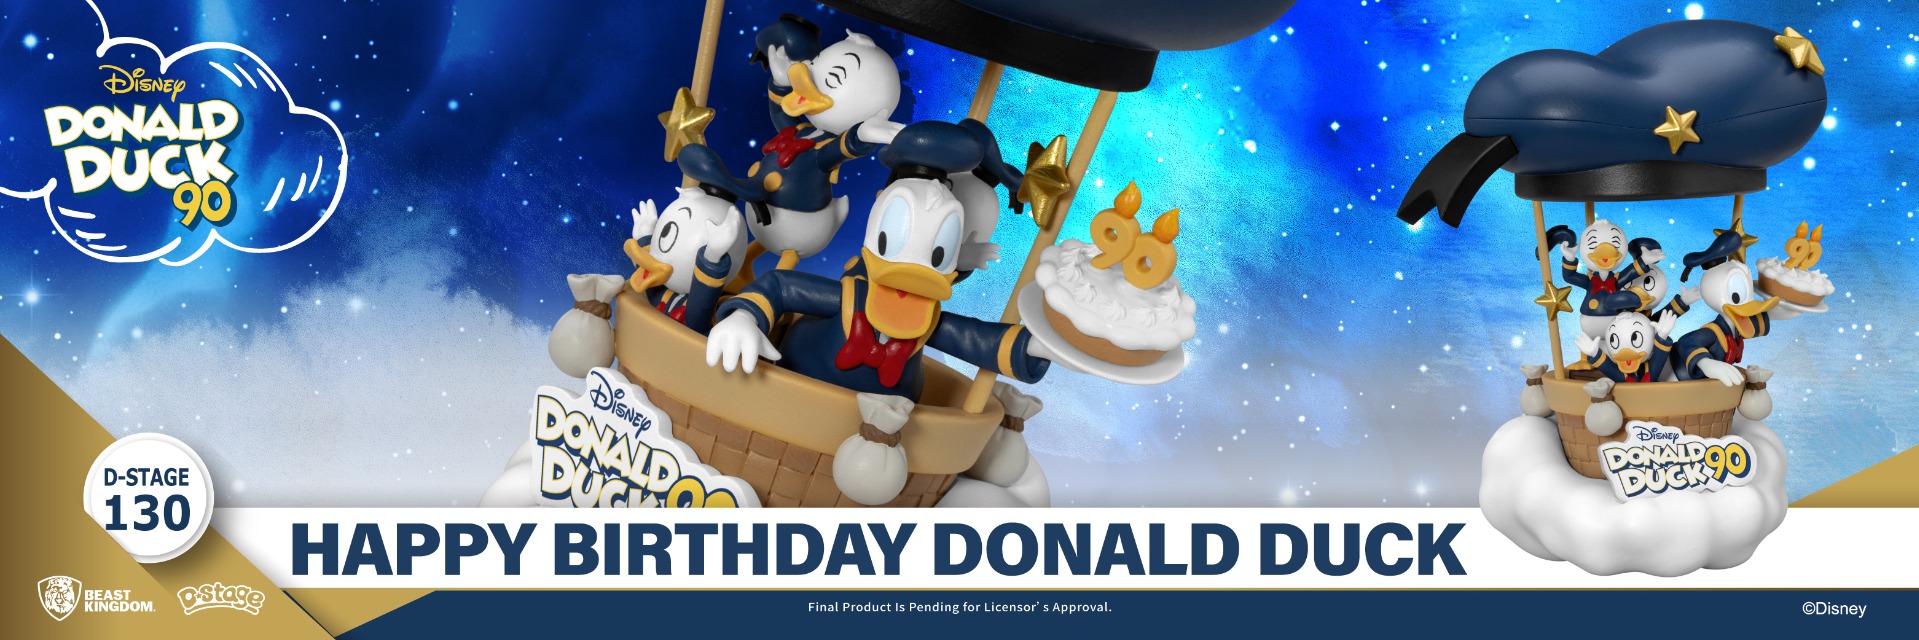 DS-130-Donald Duck 90th-Happy Birthday Donald Duck